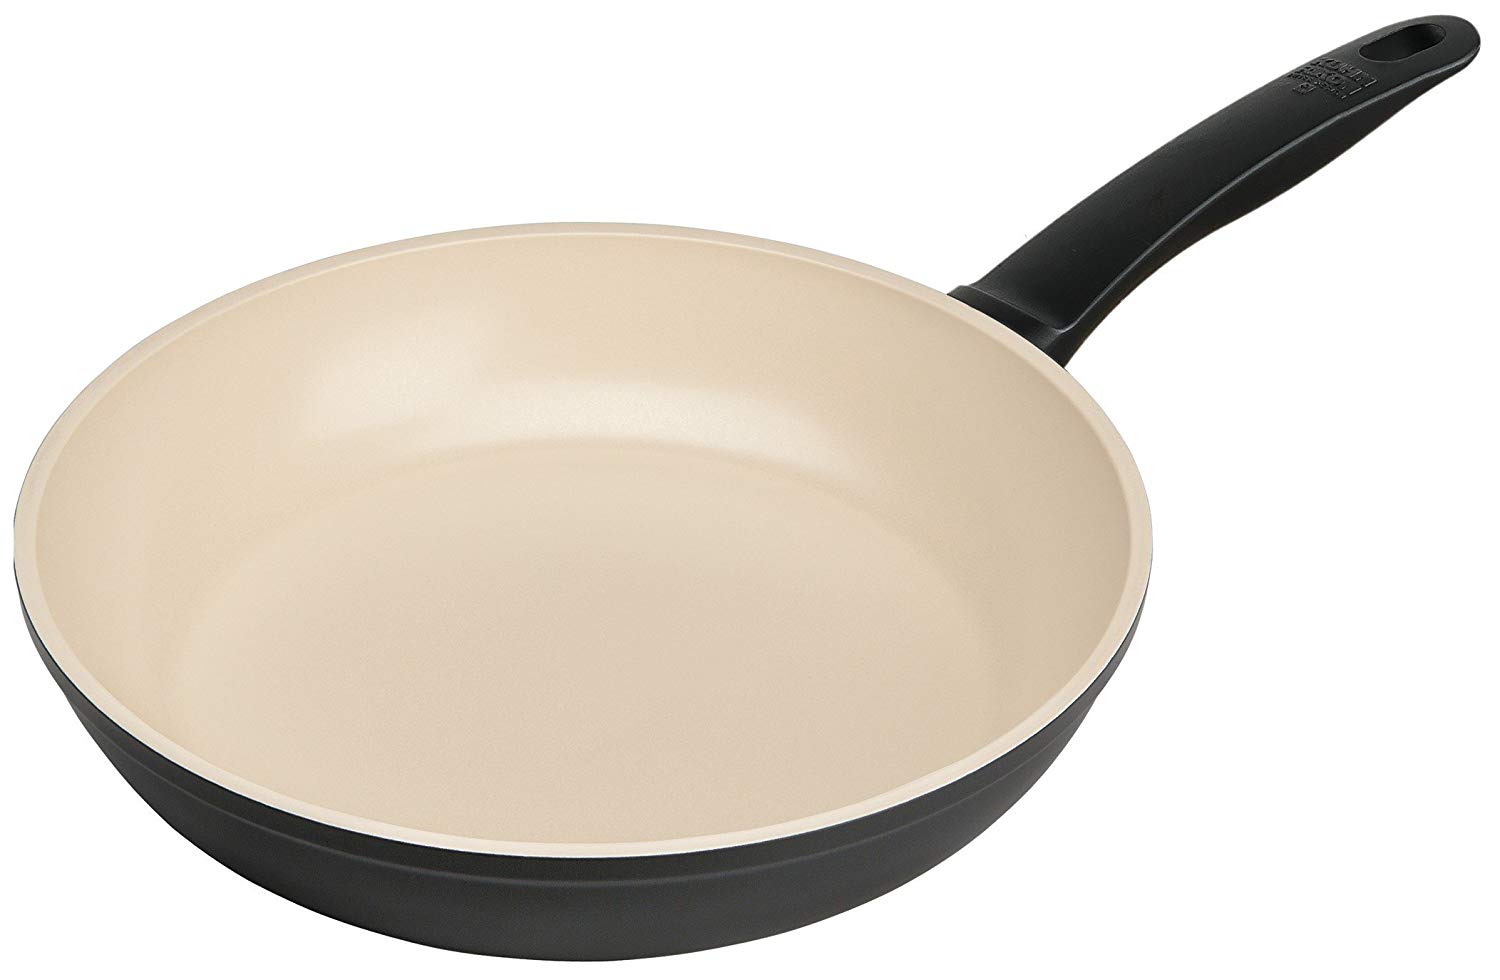 Kuhn Rikon 24 Cm Easy Ceramic Induction Frying Pan, Black